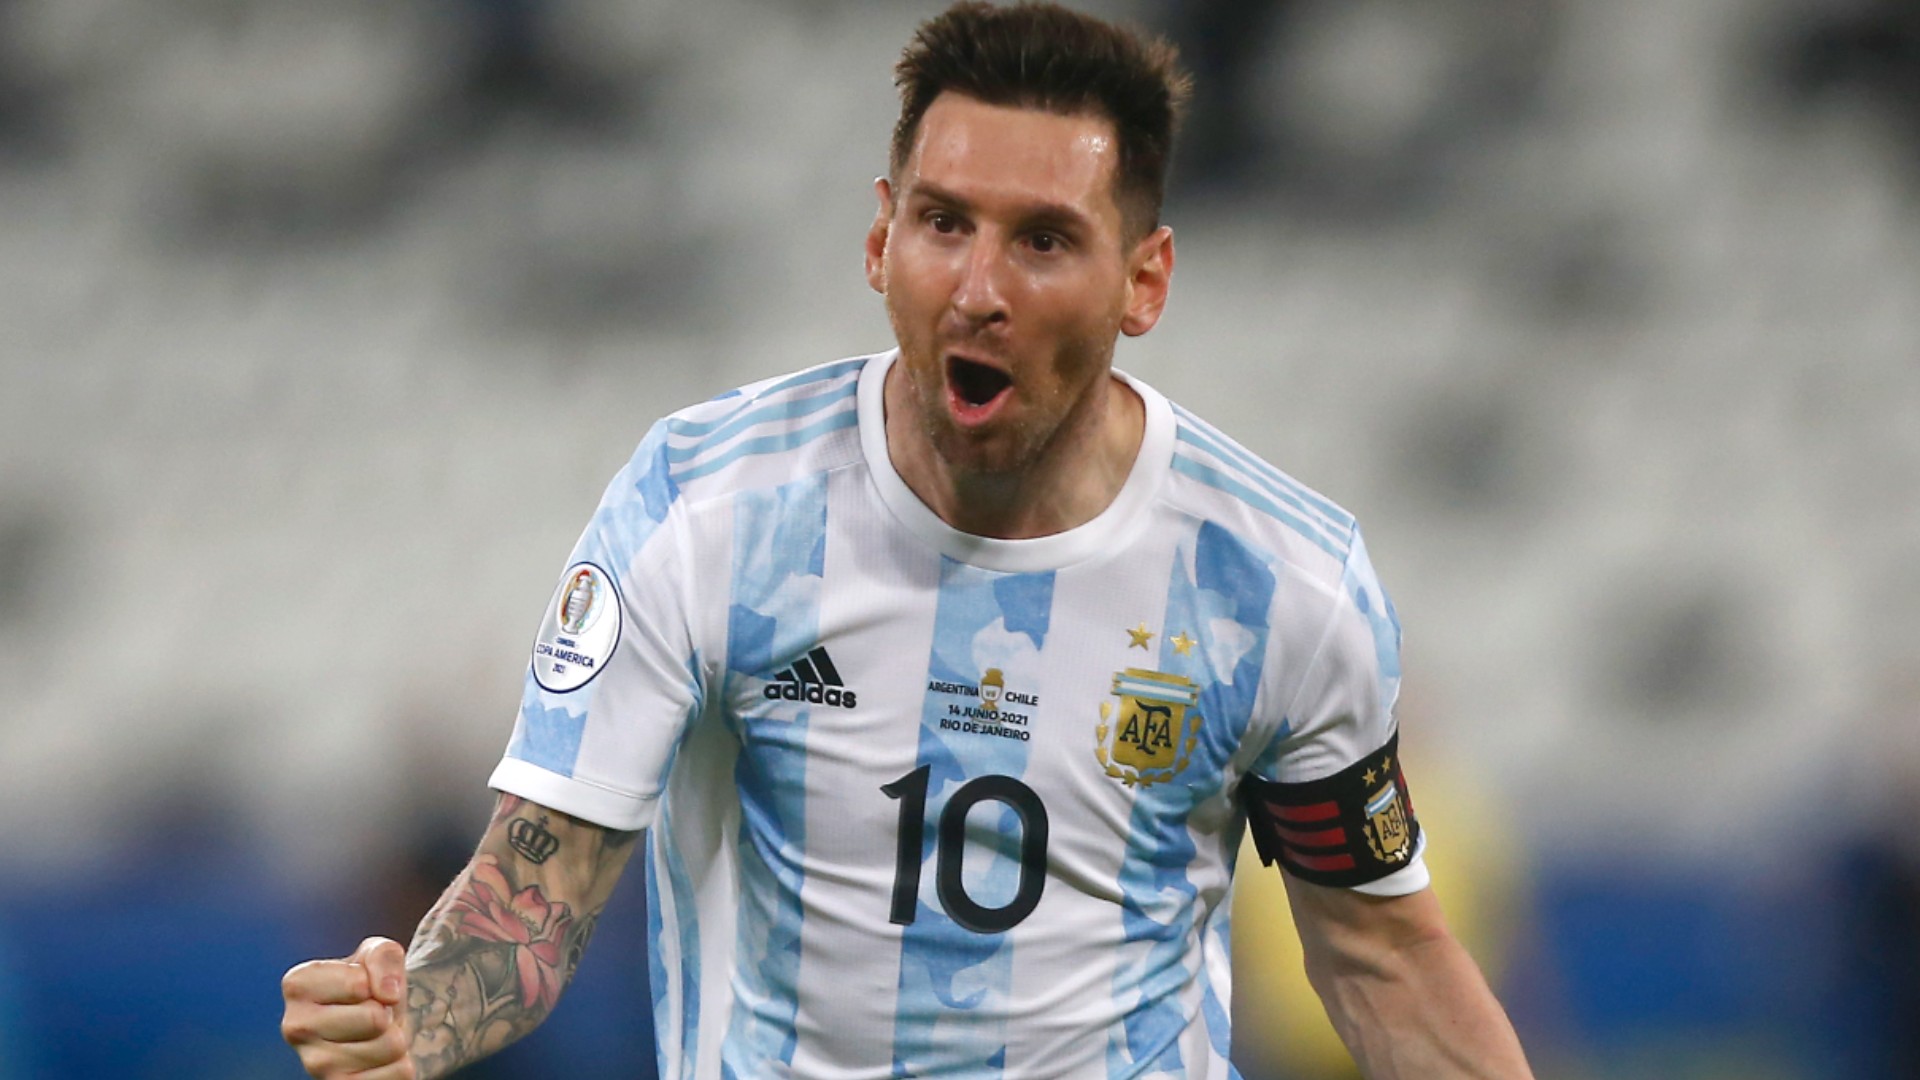 Messi Copa America 2021 Wallpaper Free Messi Copa America 2021 Background